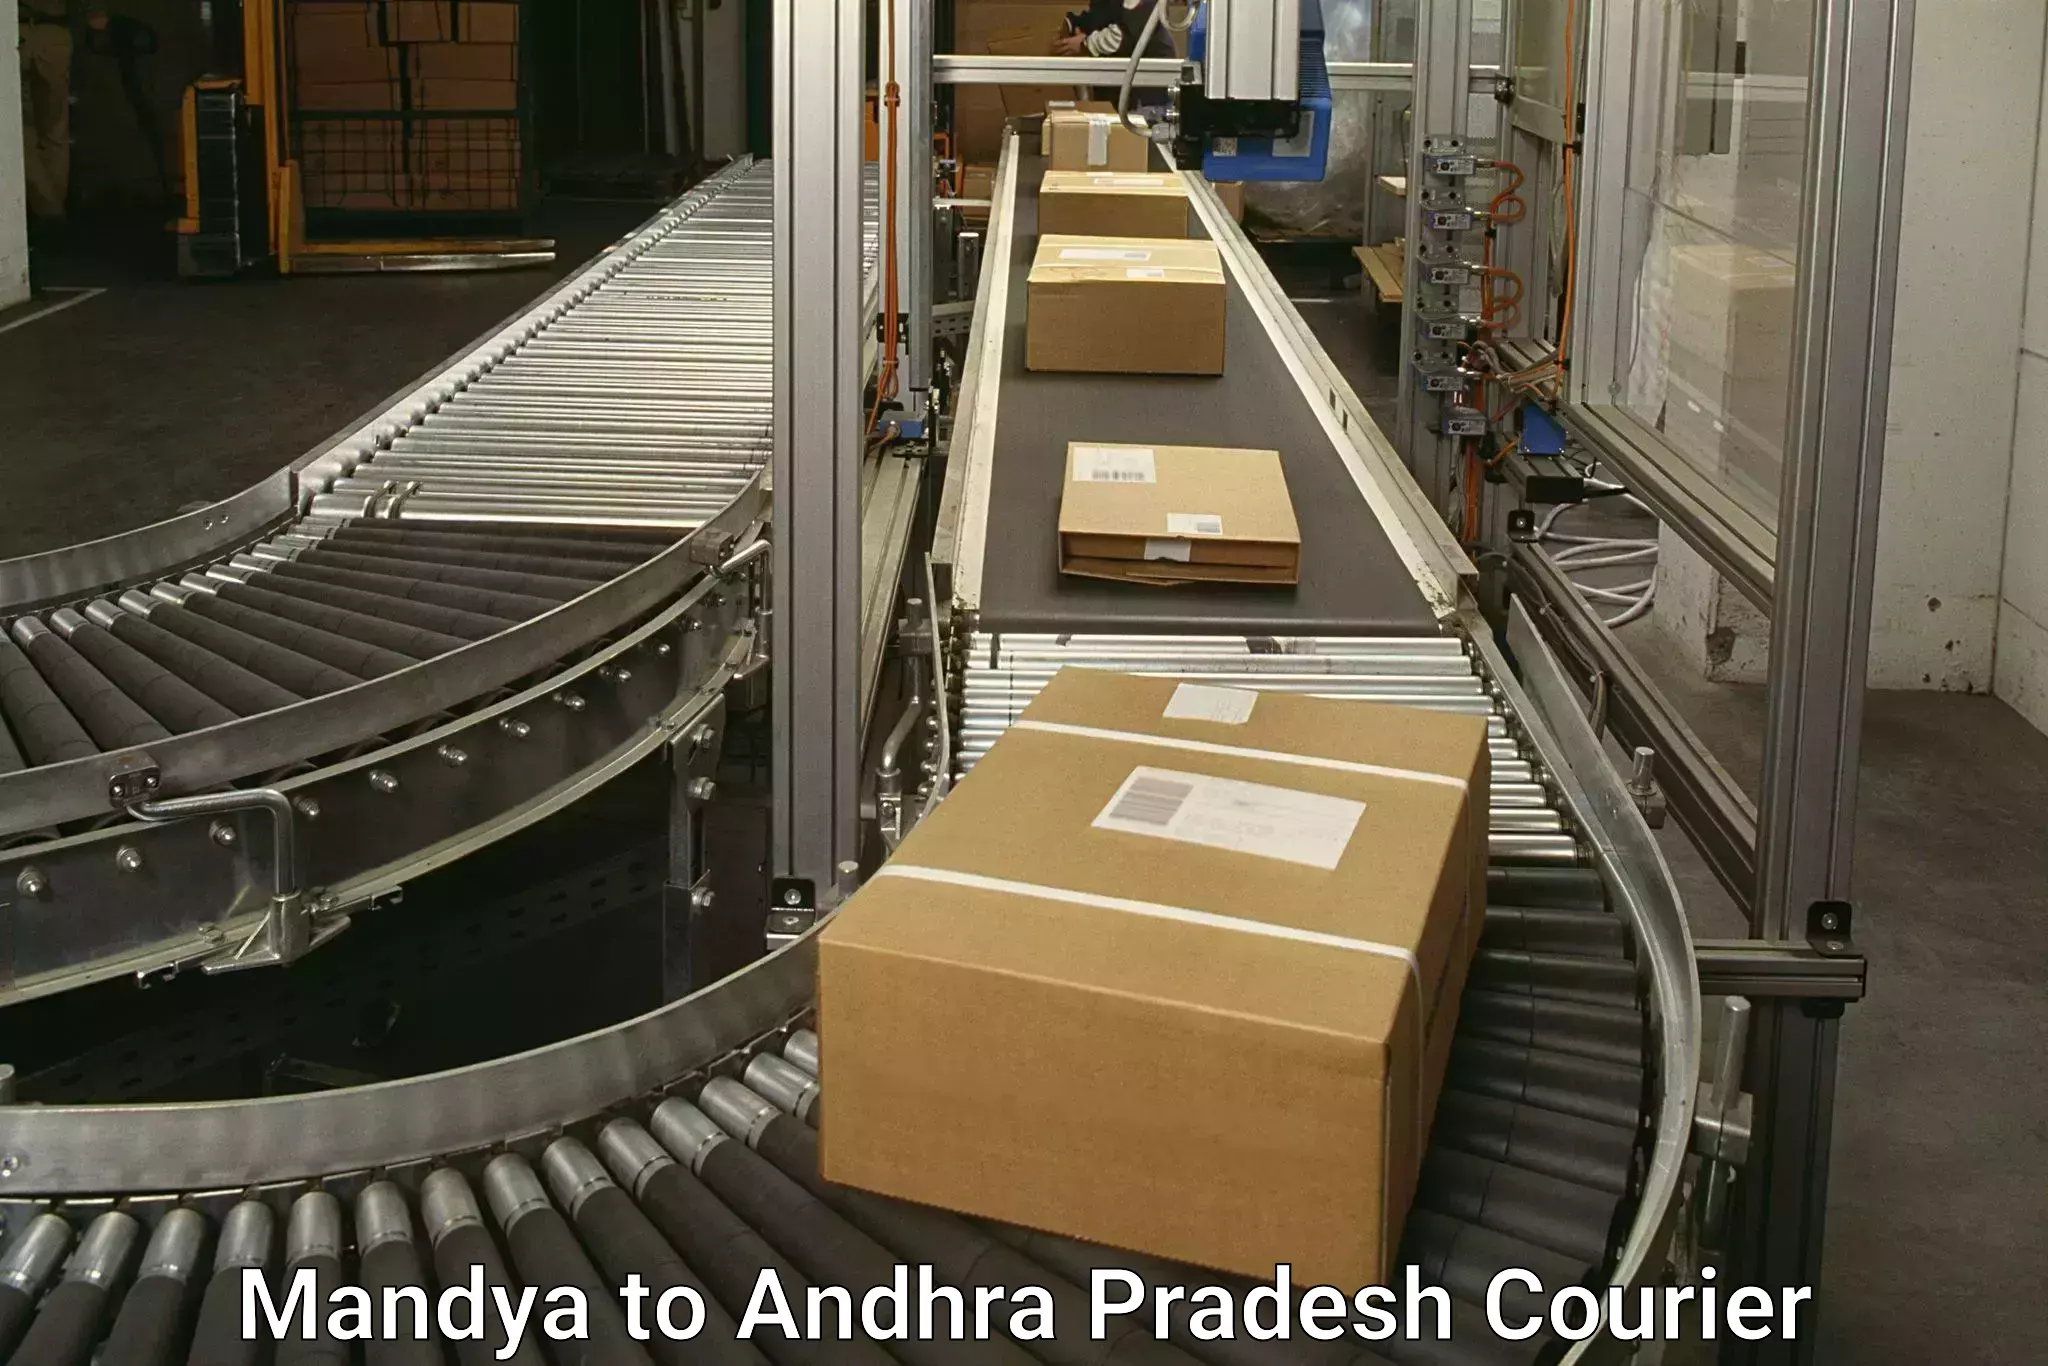 Advanced tracking systems Mandya to Puttur Tirupati